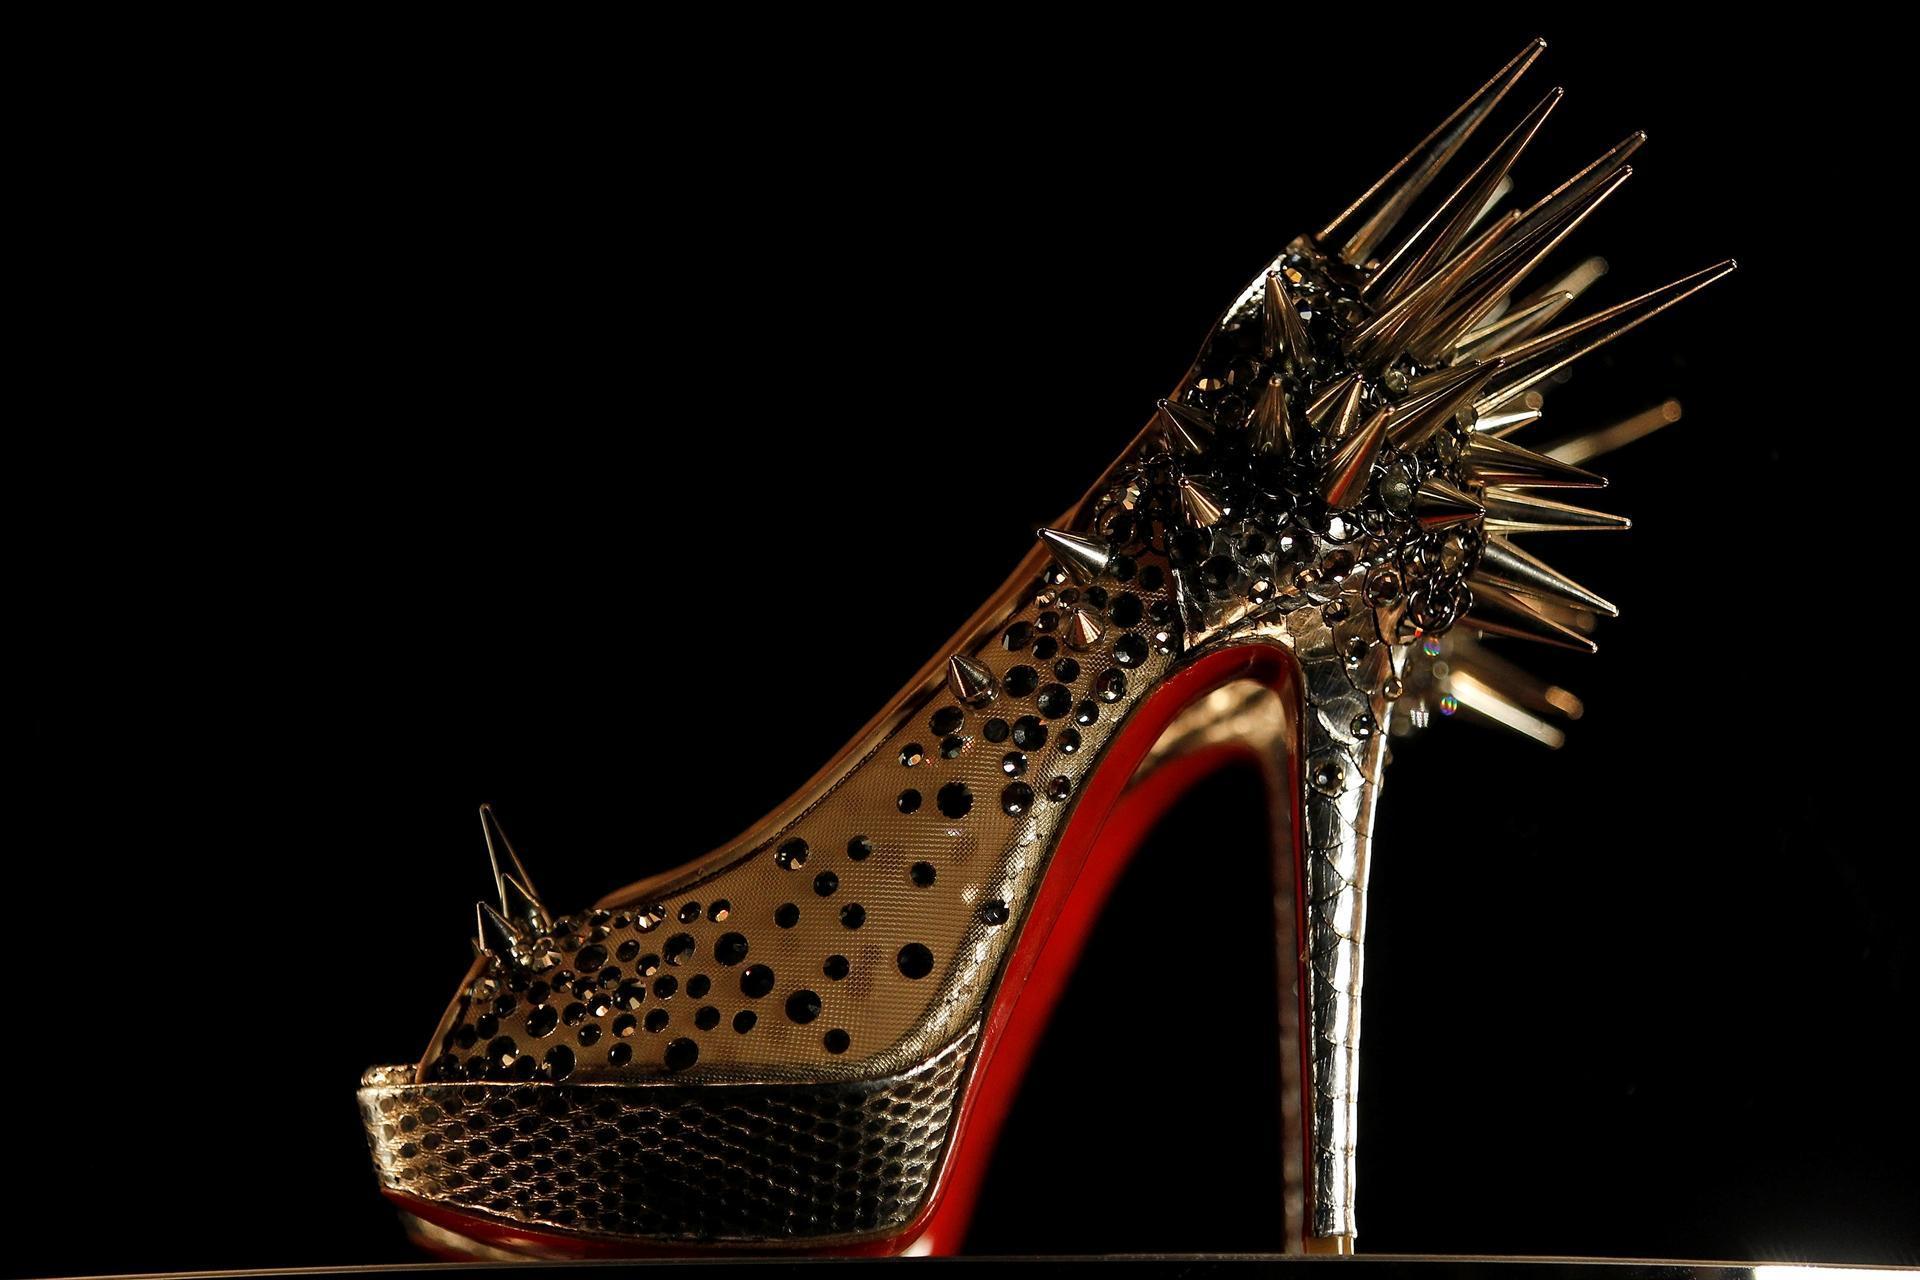 Christian Louboutin wins EU legal battle to trademark red-soled high heels